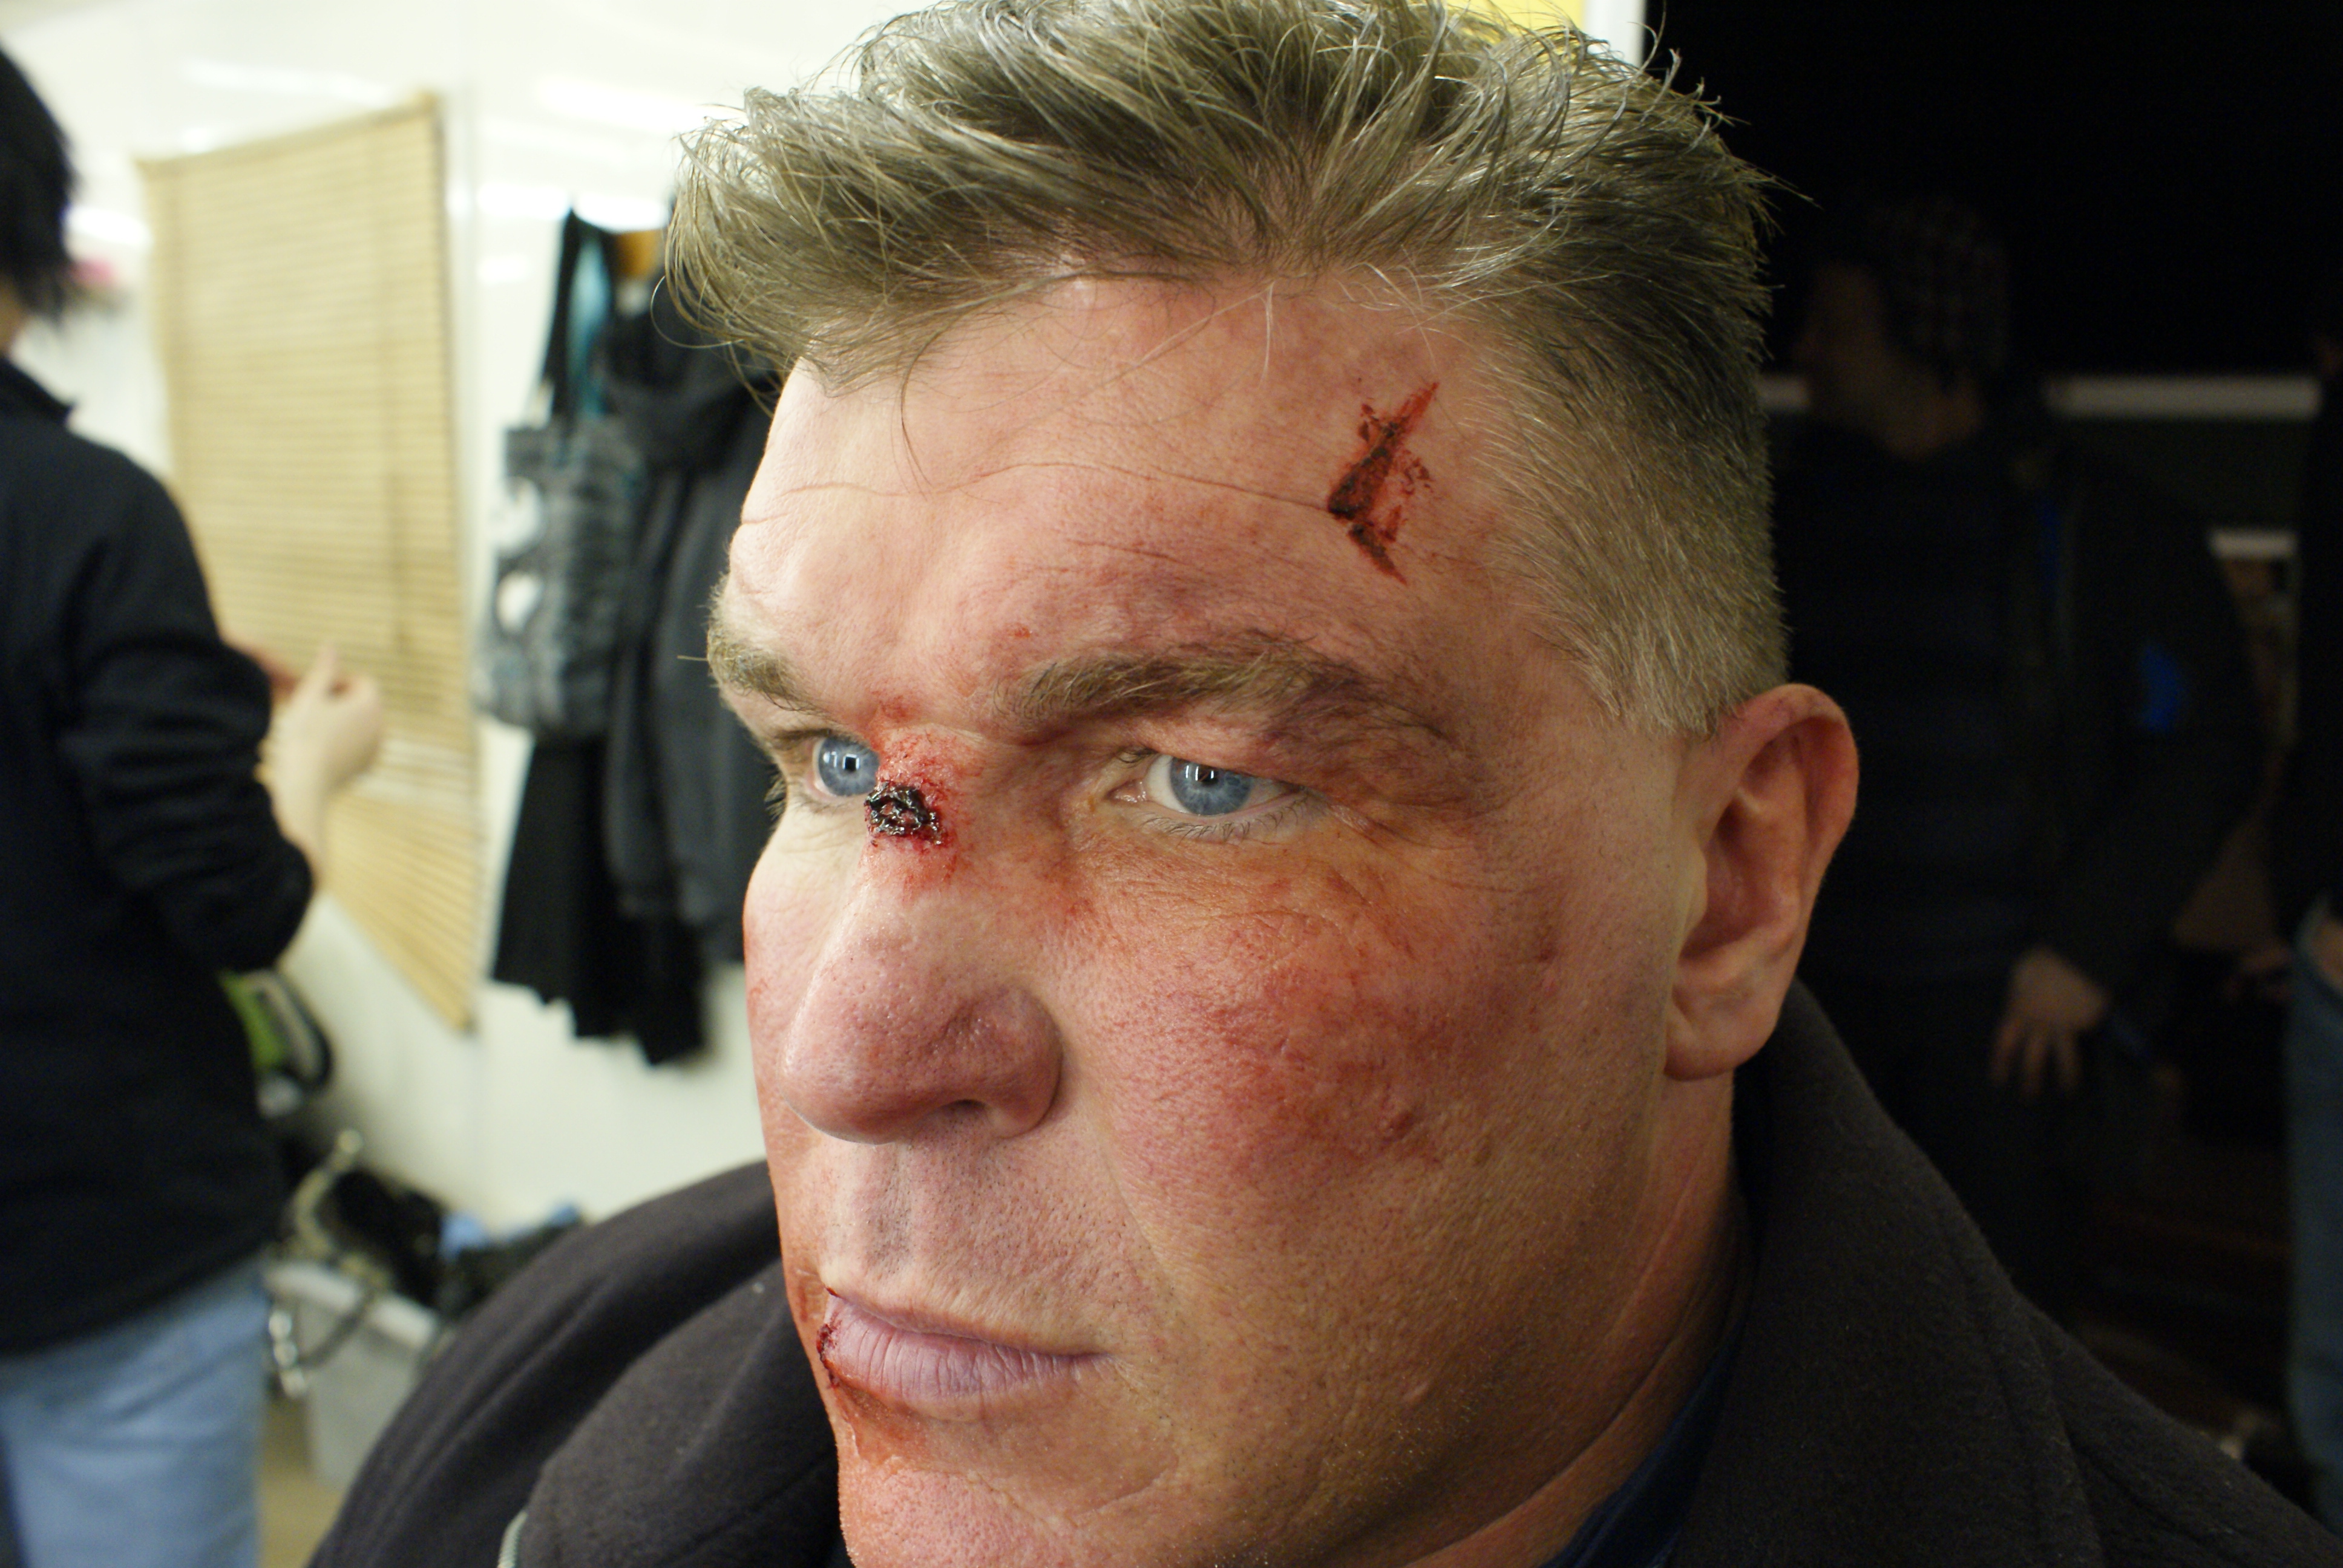 Black eye injury i created on Joe Egan on the movie Freight March 2009.